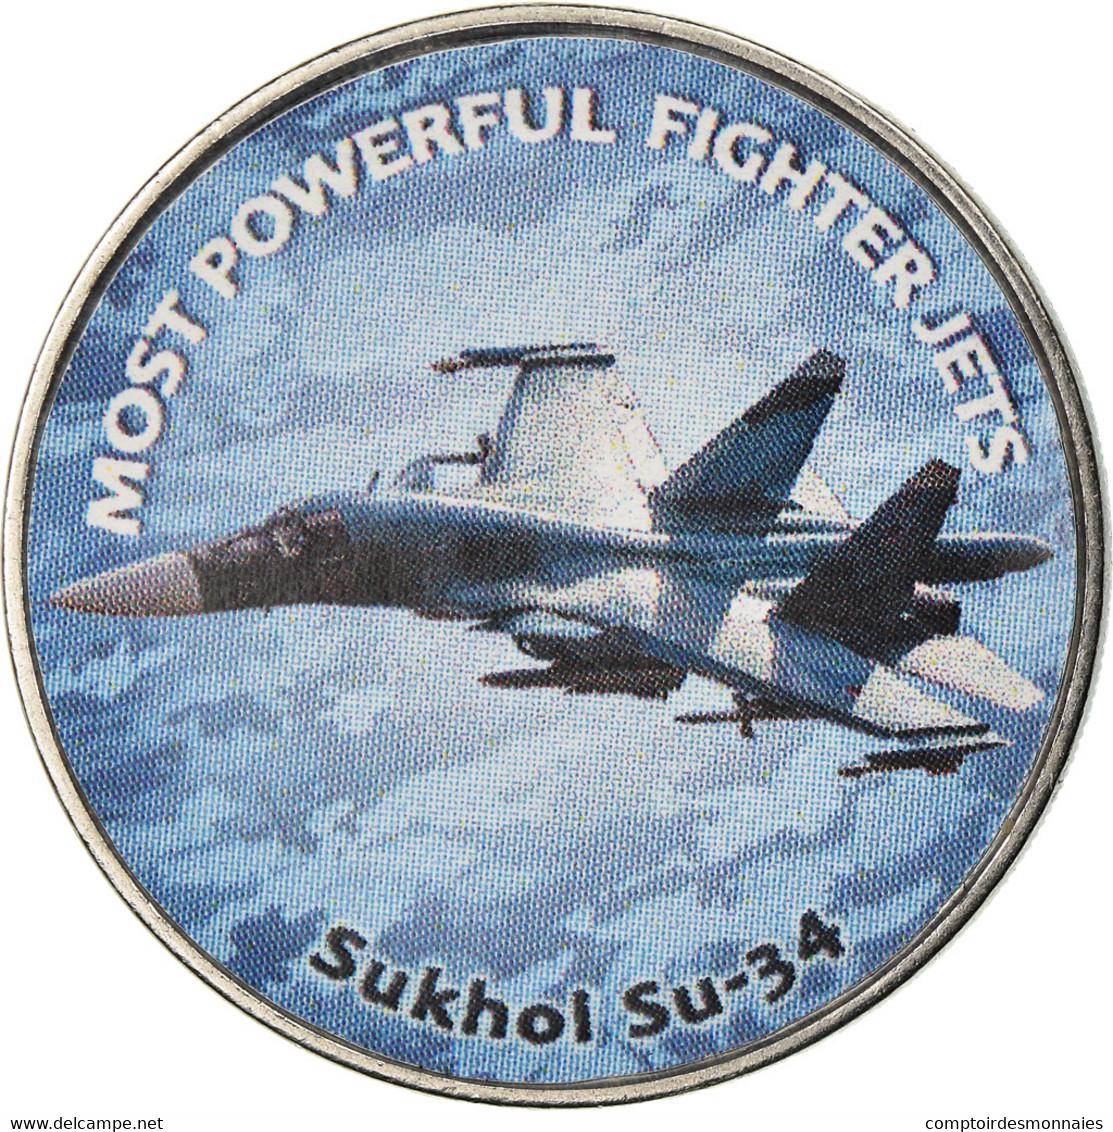 Monnaie, Zimbabwe, Shilling, 2019, Fighter Jet - Sukhol, SPL, Nickel Plated - Zimbabwe